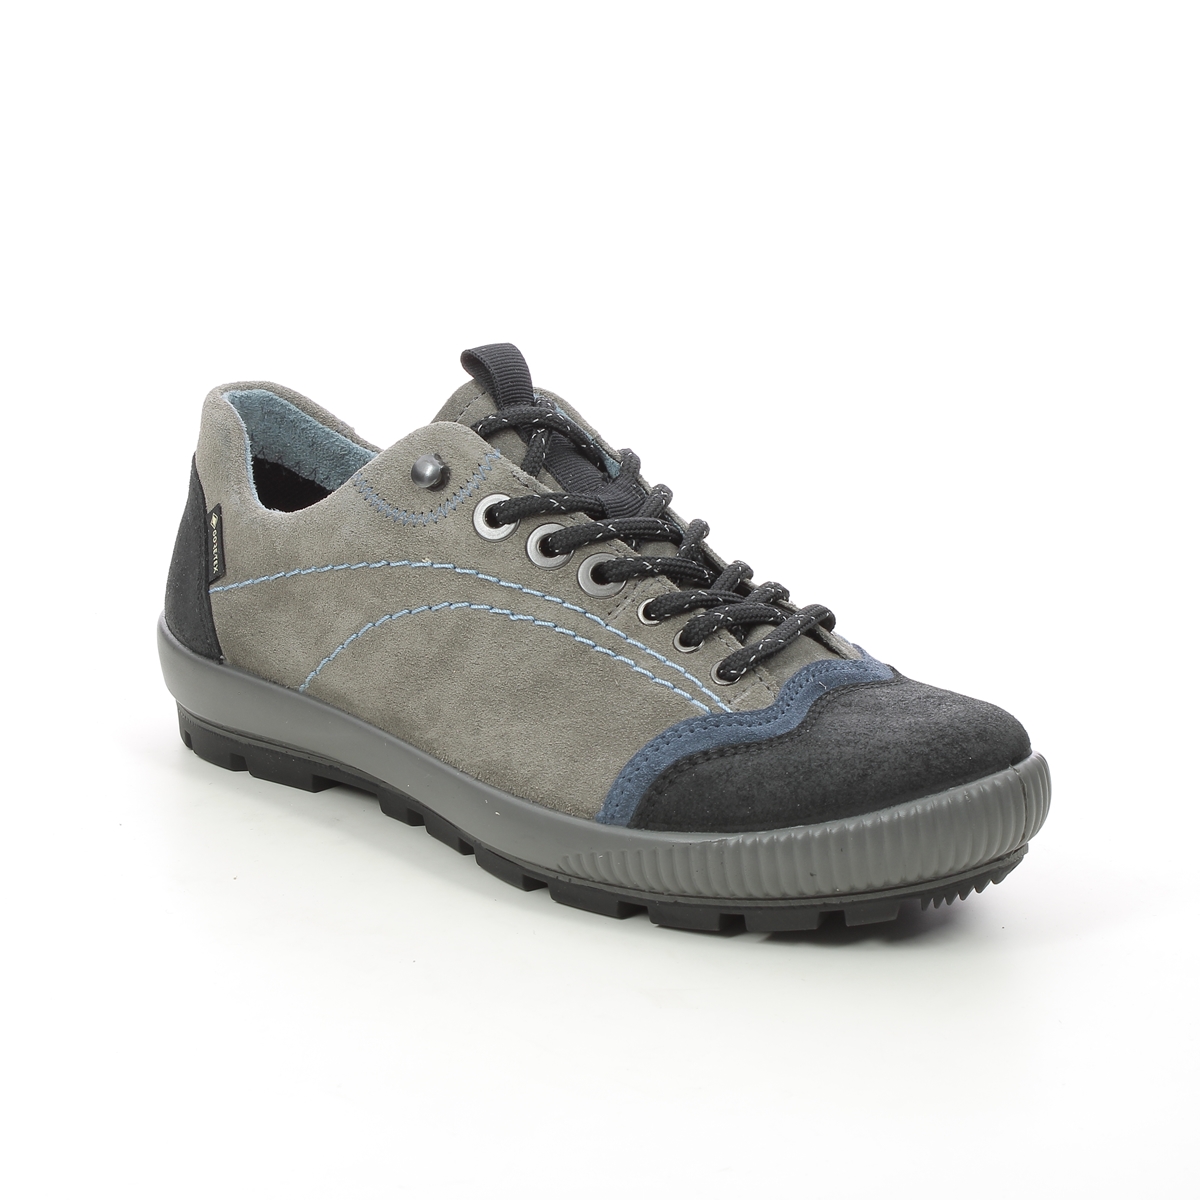 Legero Tanaro Trek Gtx Grey Suede Womens Walking Shoes 2000122-2800 In Size 6.5 In Plain Grey Suede